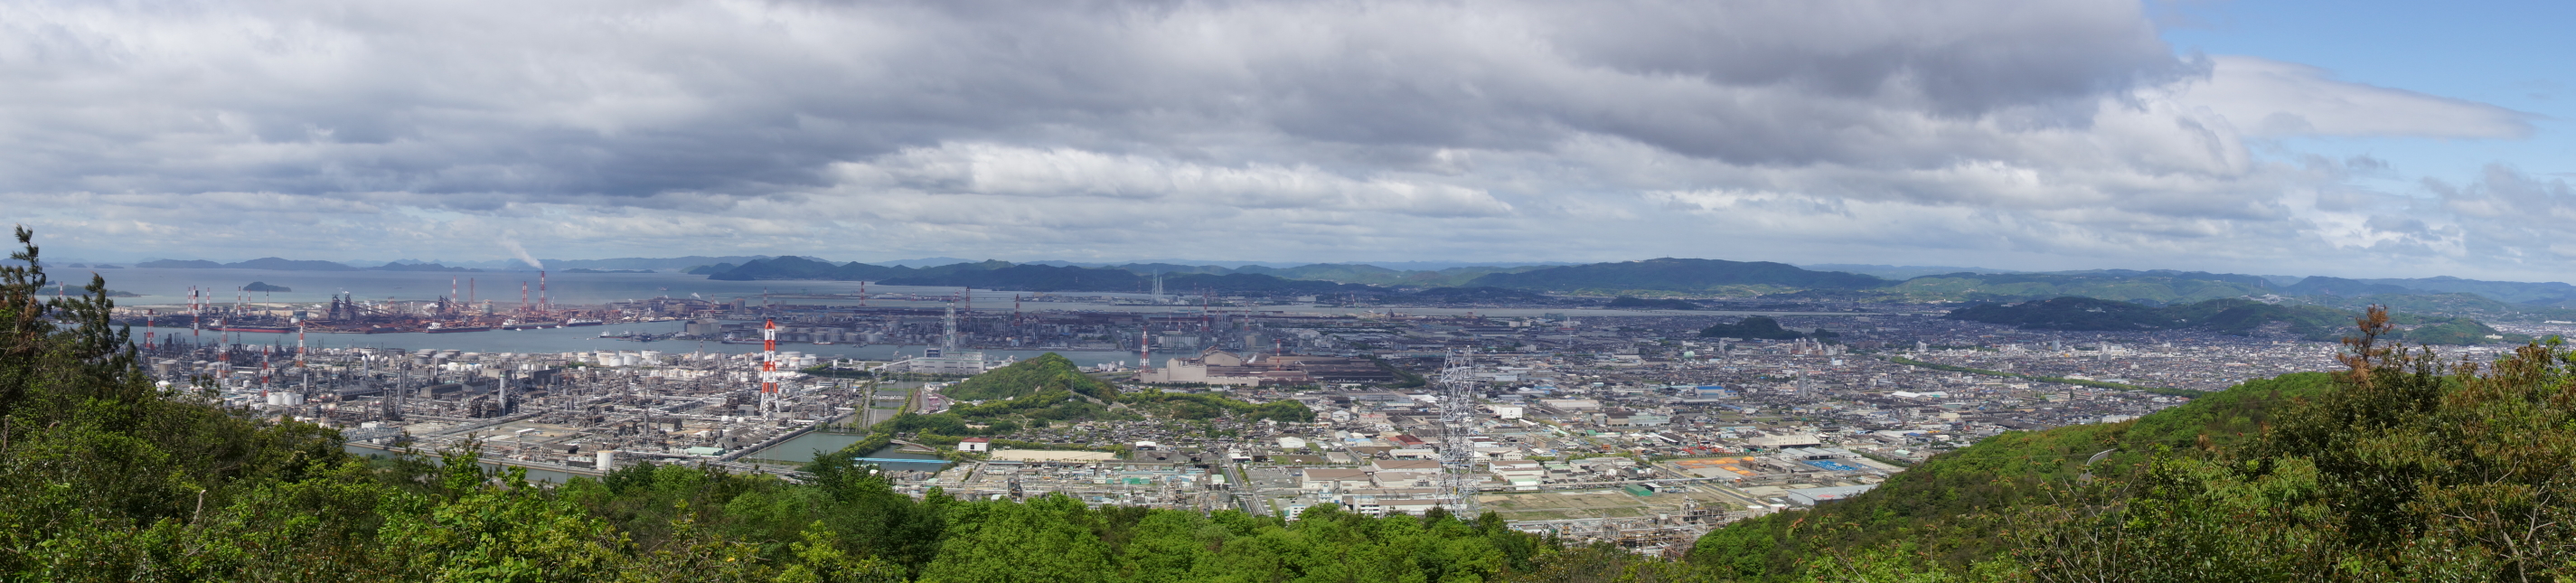 mizushima-district-panorama